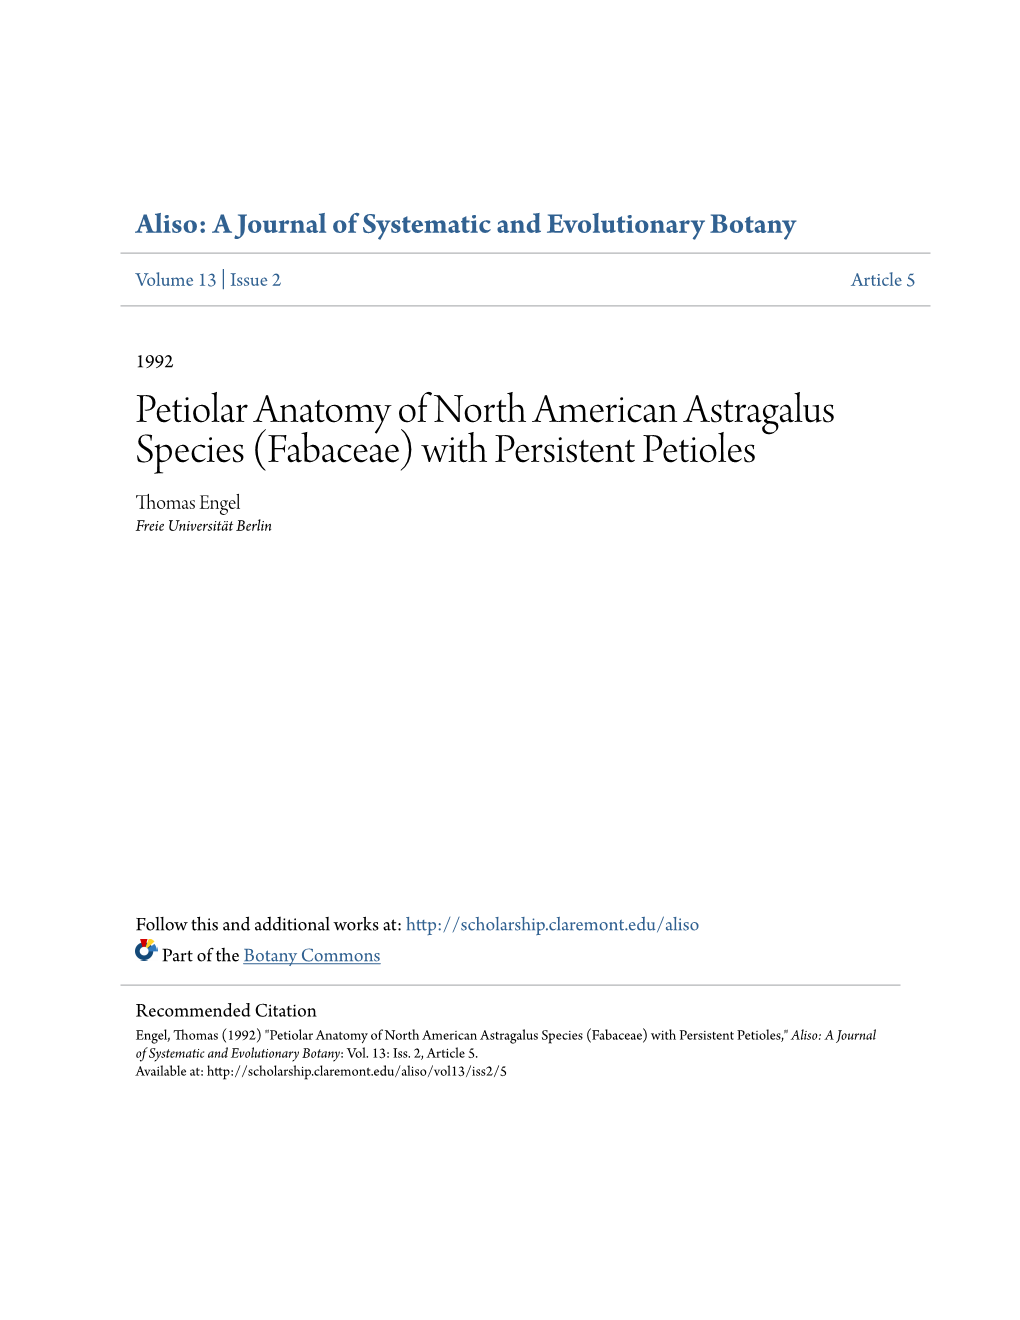 Petiolar Anatomy of North American Astragalus Species (Fabaceae) with Persistent Petioles Thomas Engel Freie Universität Berlin